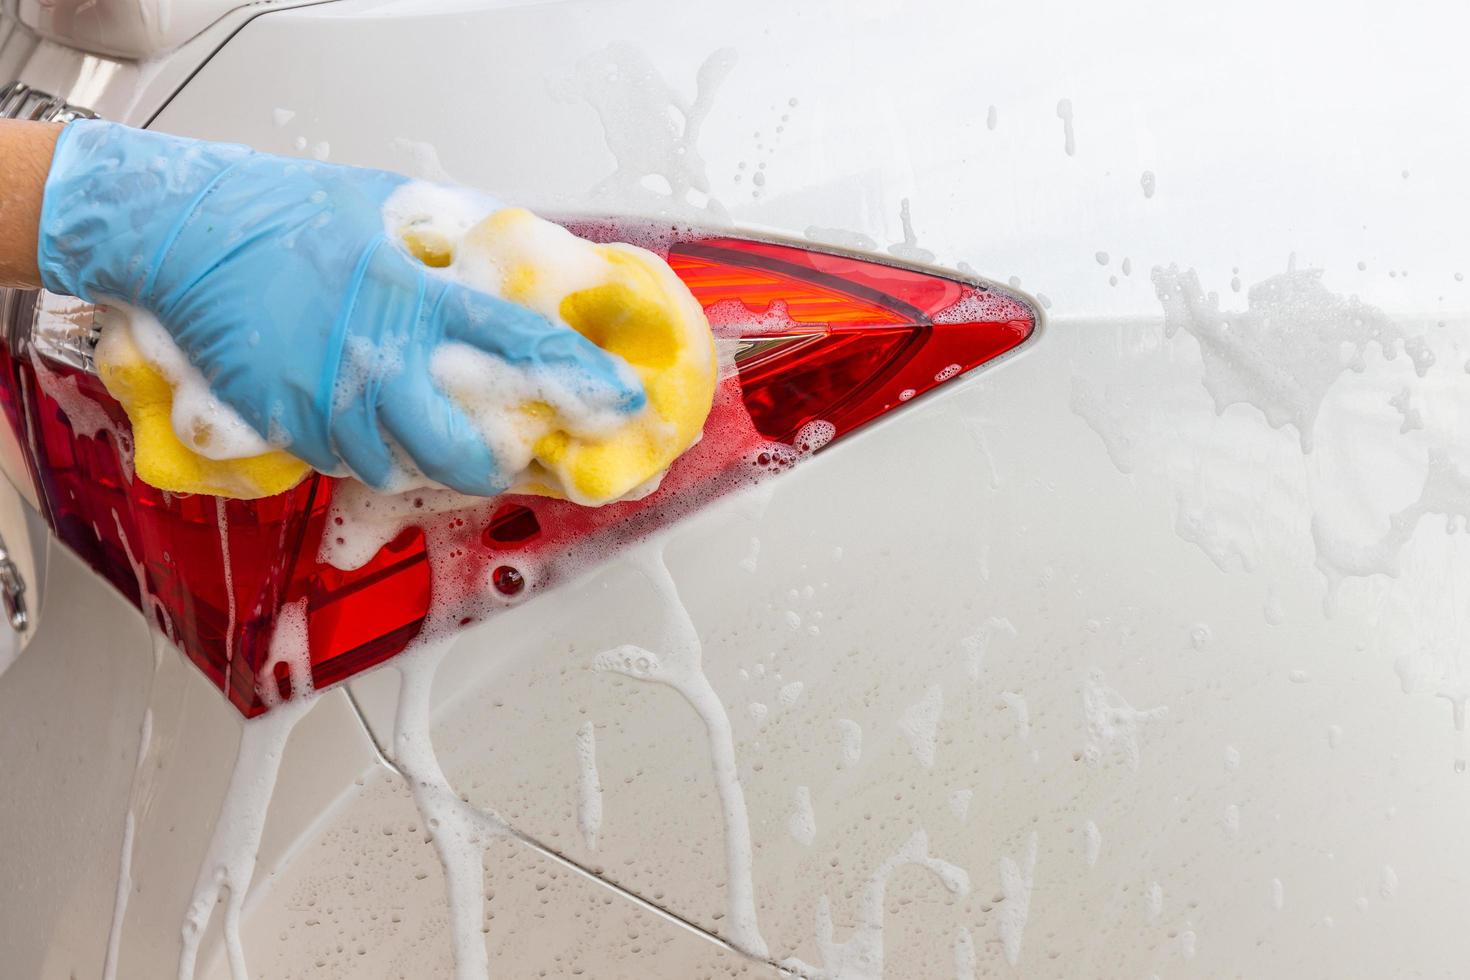 vrouwenhand die blauwe handschoenen met gele spons draagt die achterlicht moderne auto wassen of auto schoonmaken. carwash concept foto